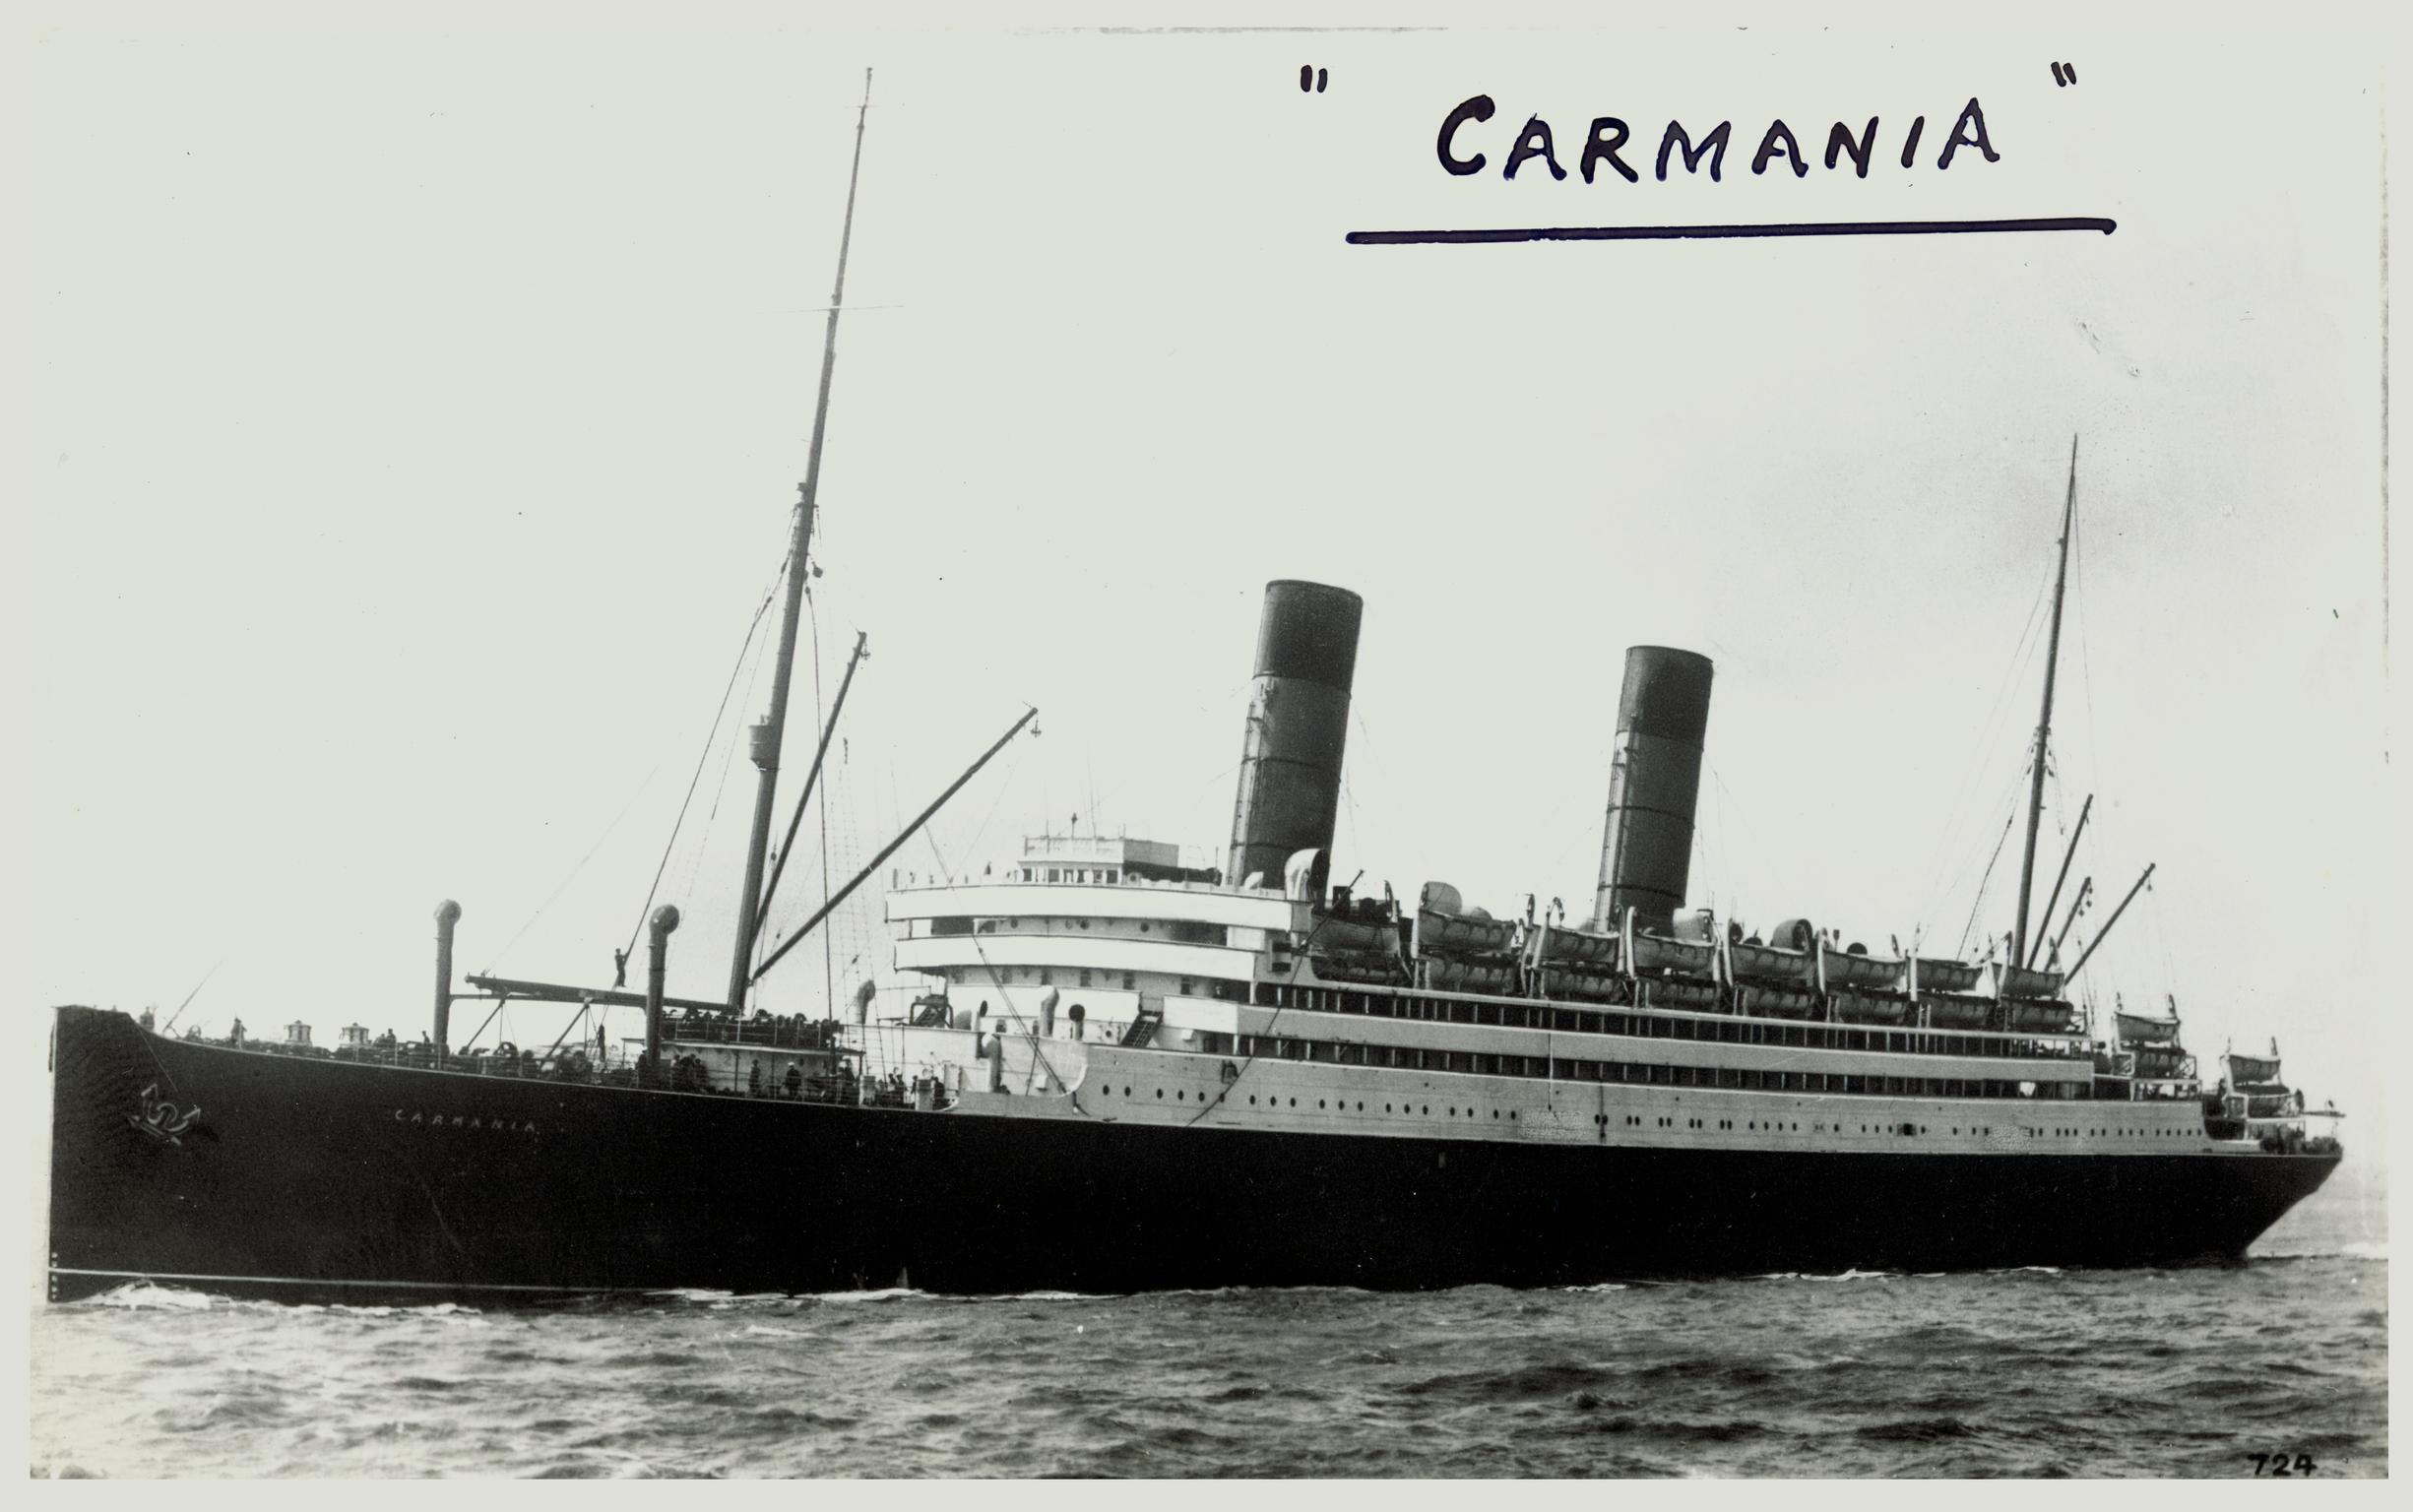 S.S. CARMANIA, photograph